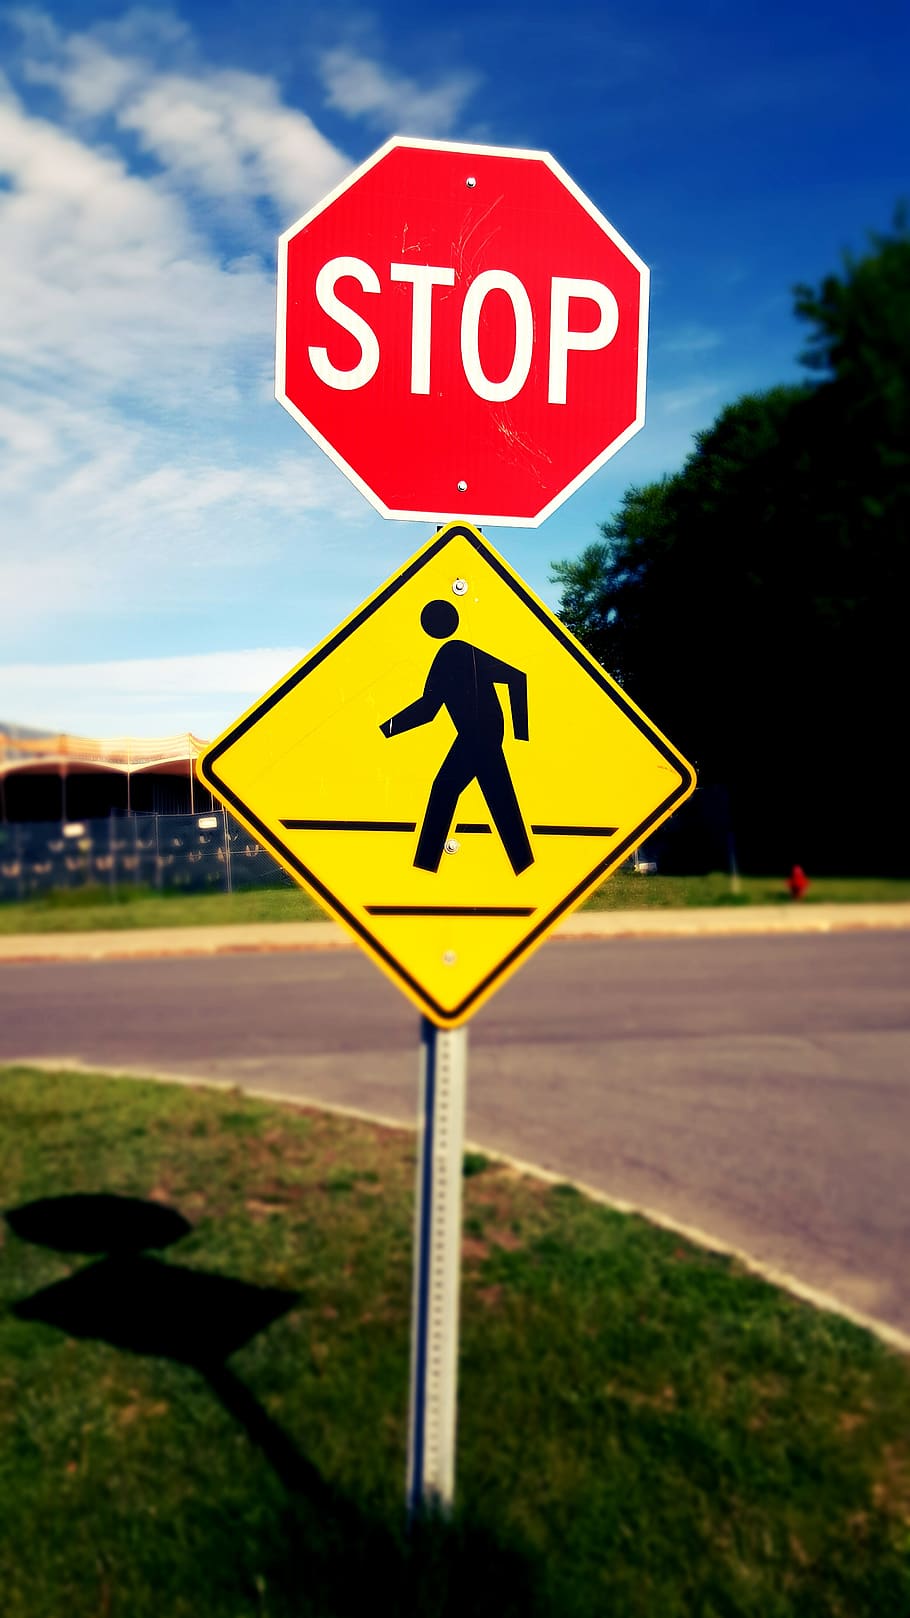 travessia de pedestres, zona de pedestres, pedestres, sinal de trânsito, sinal, parar, comunicação, sinal de estrada, estrada, sinal de aviso